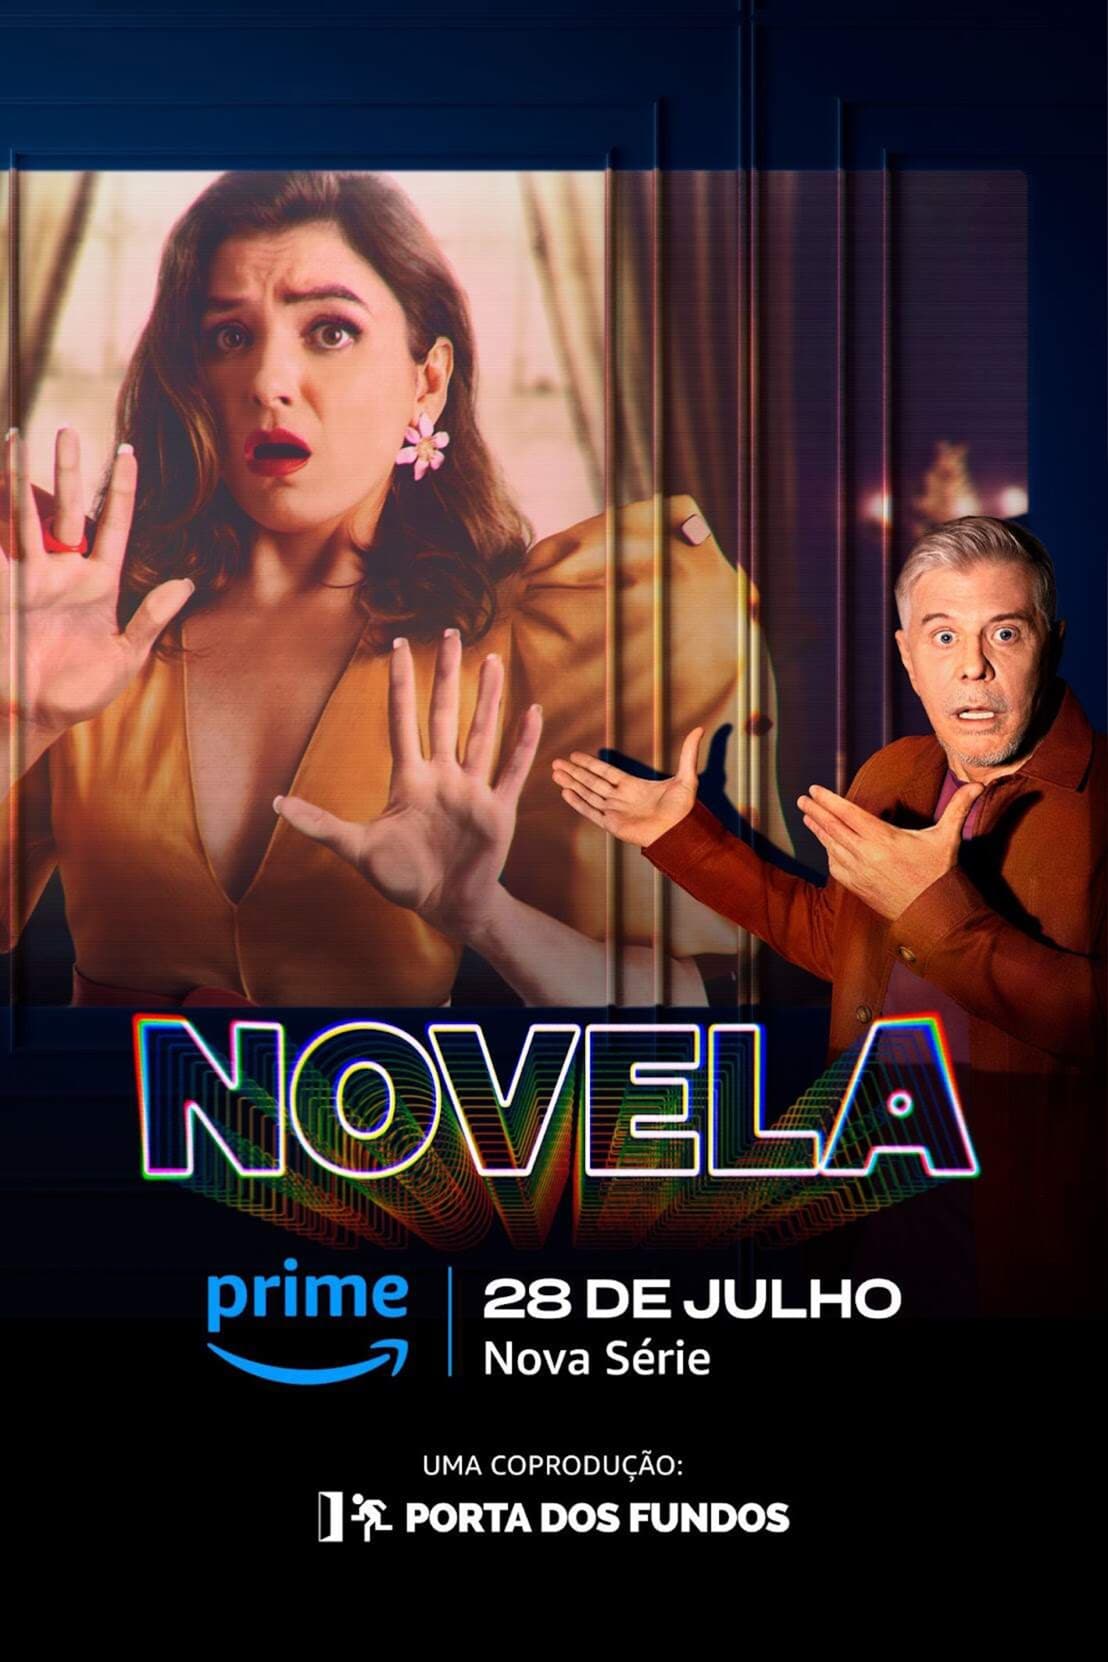 TV ratings for Soap Opera (Novela) in Mexico. Amazon Prime Video TV series